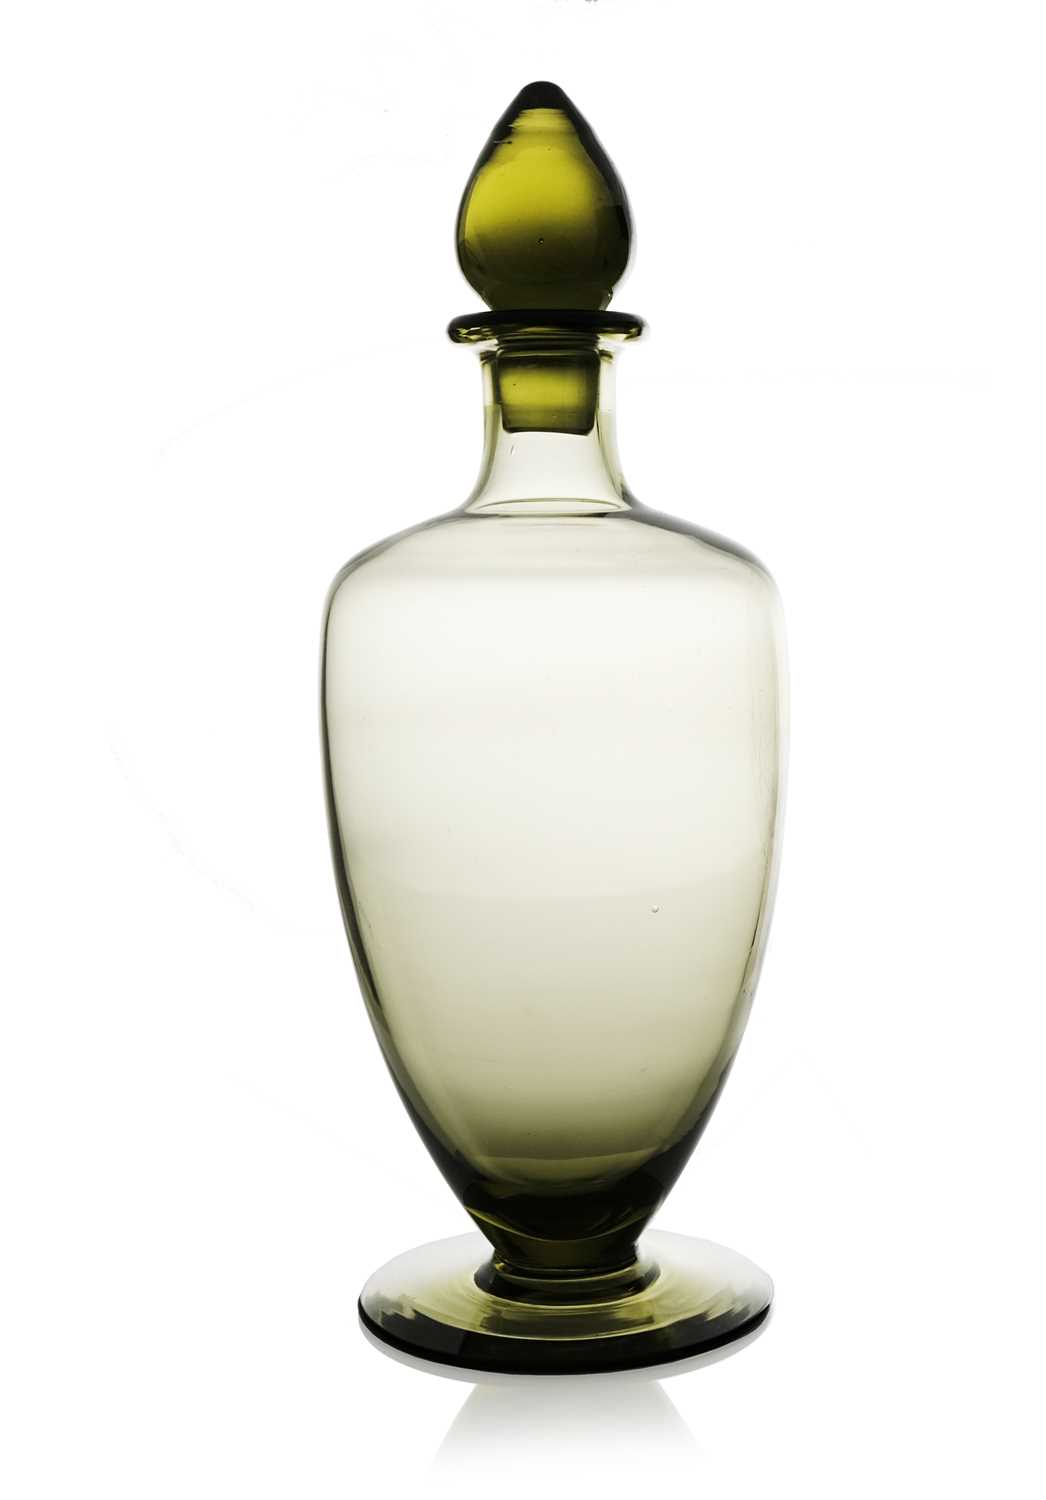 Ernest Gordon for Afors, a Scandinavian Modernist glass decanter, circa 1950s, shouldered and footed